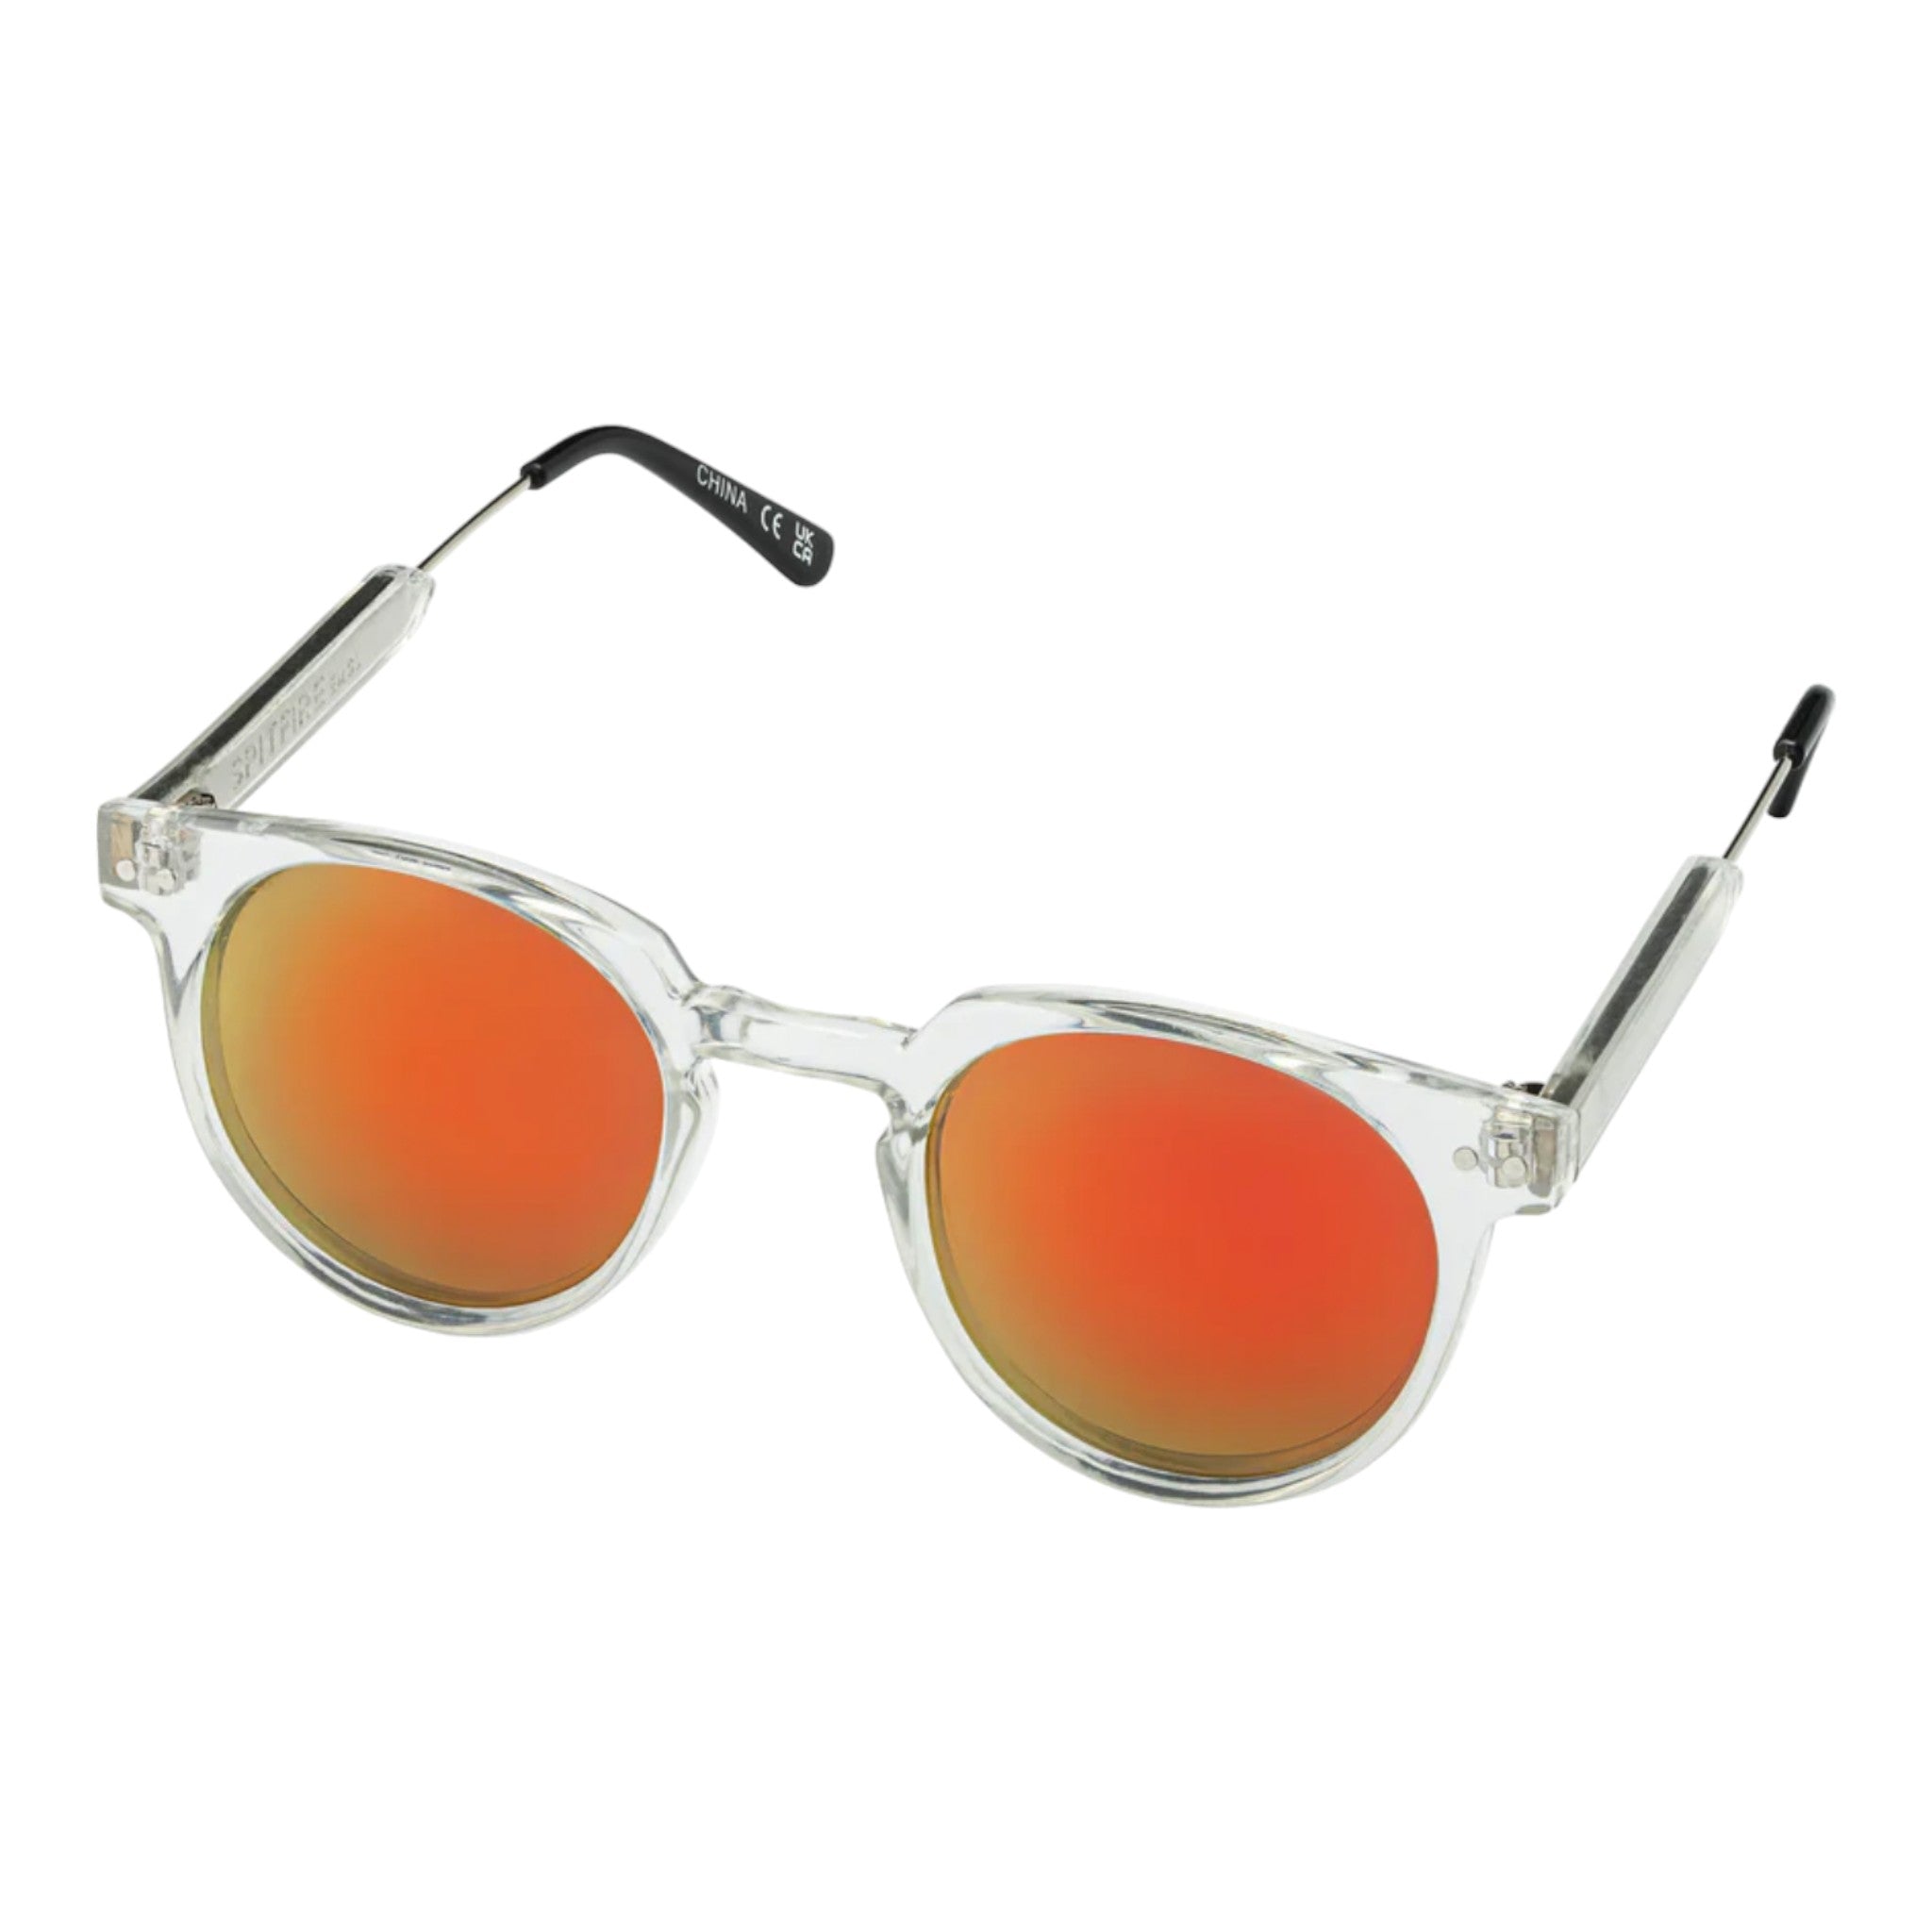 Spitfire Sunglasses - Teddy Boy - Clear / Red Mirror